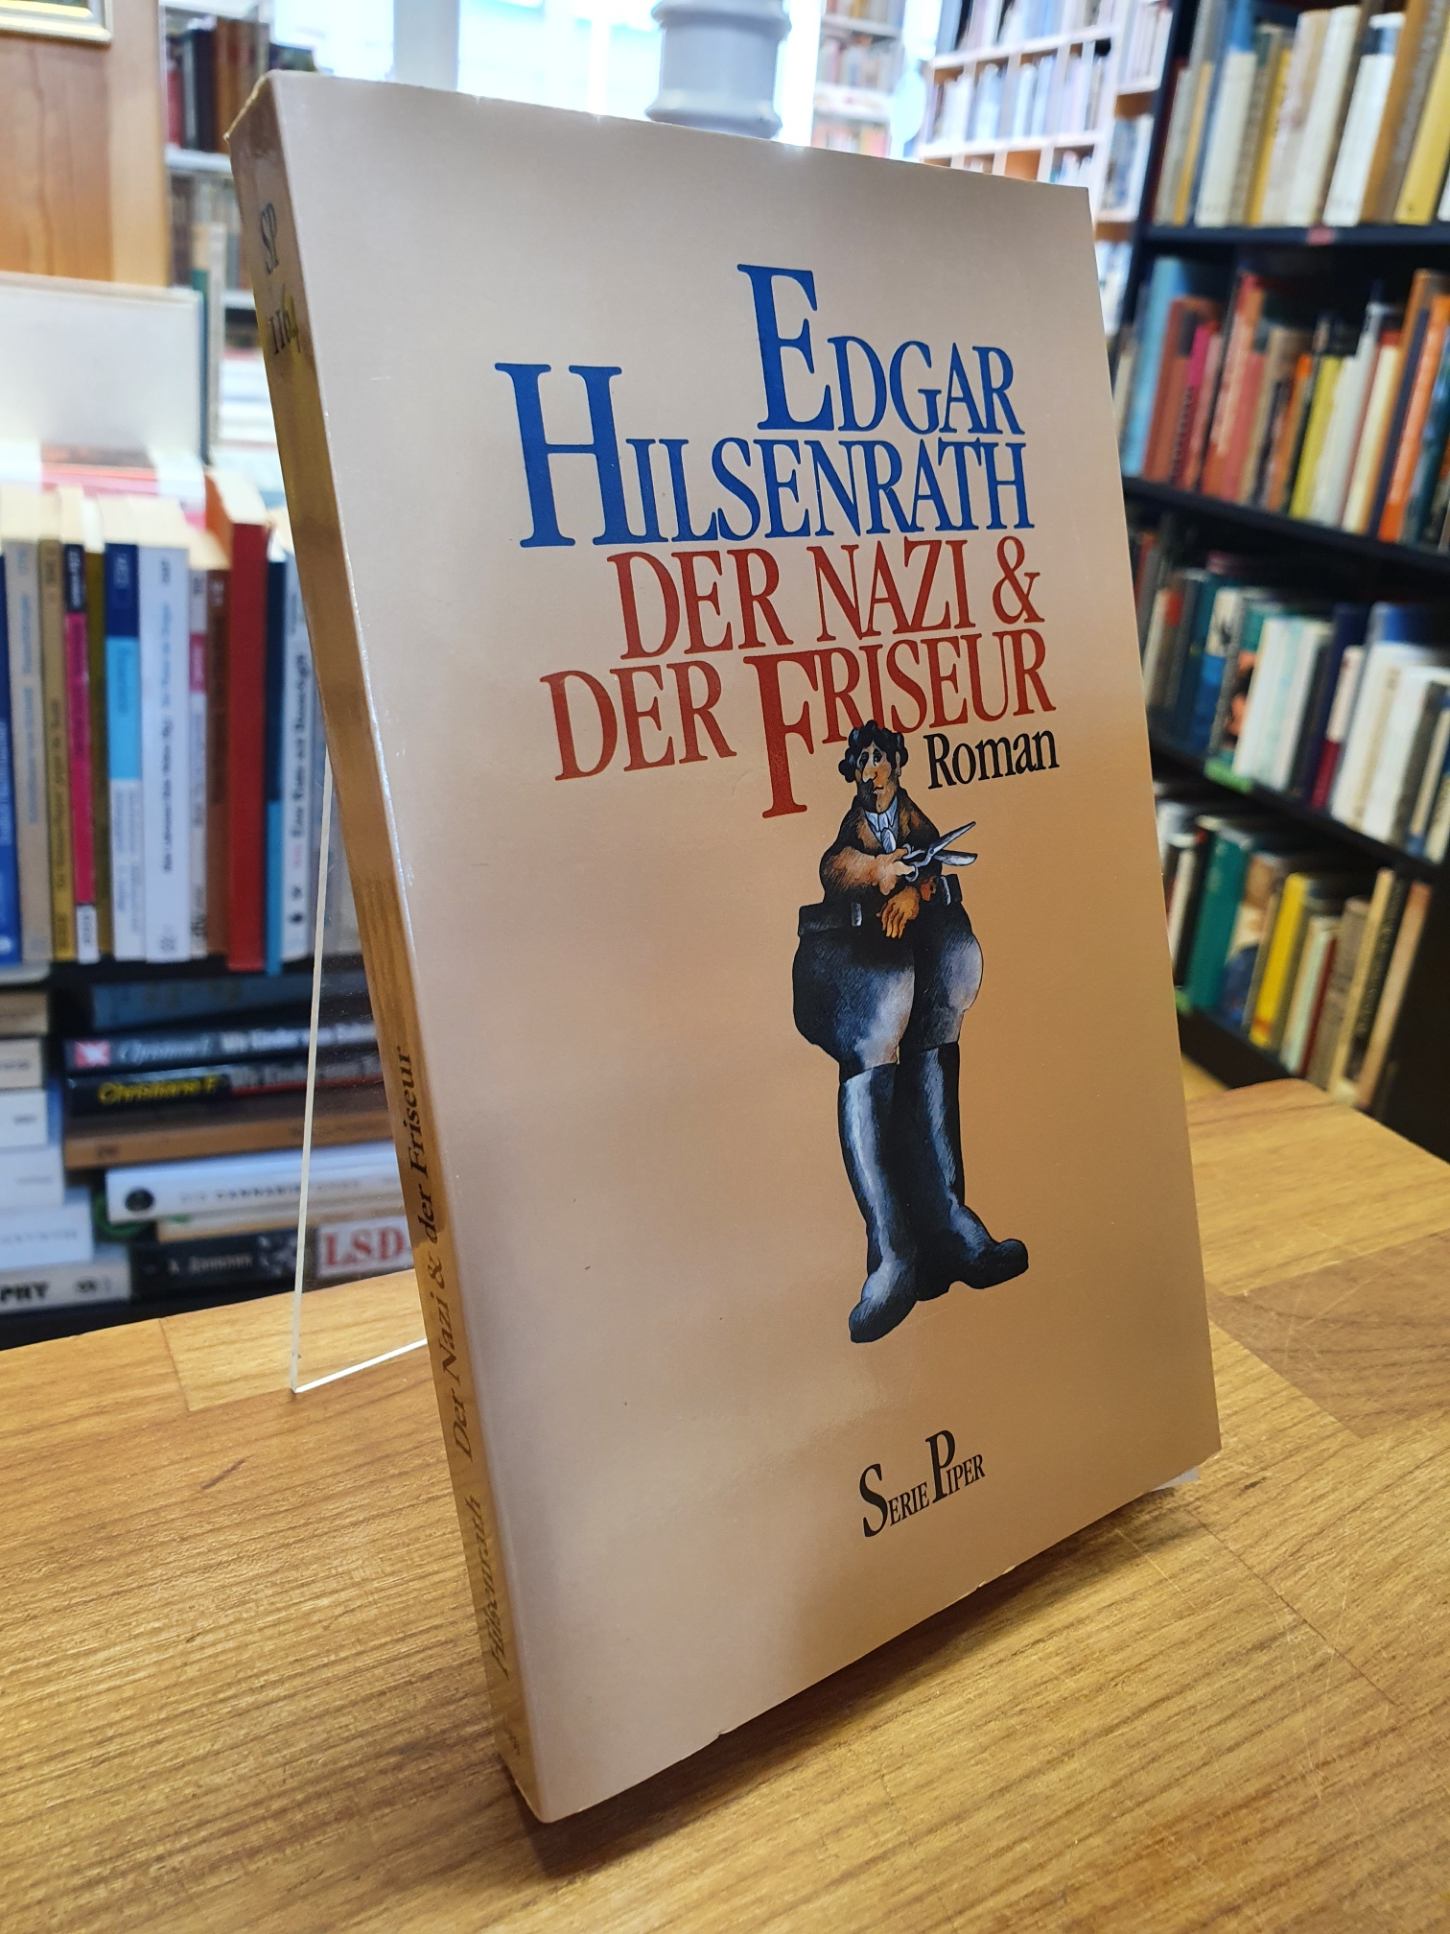 Hilsenrath, Der Nazi & der Friseur,